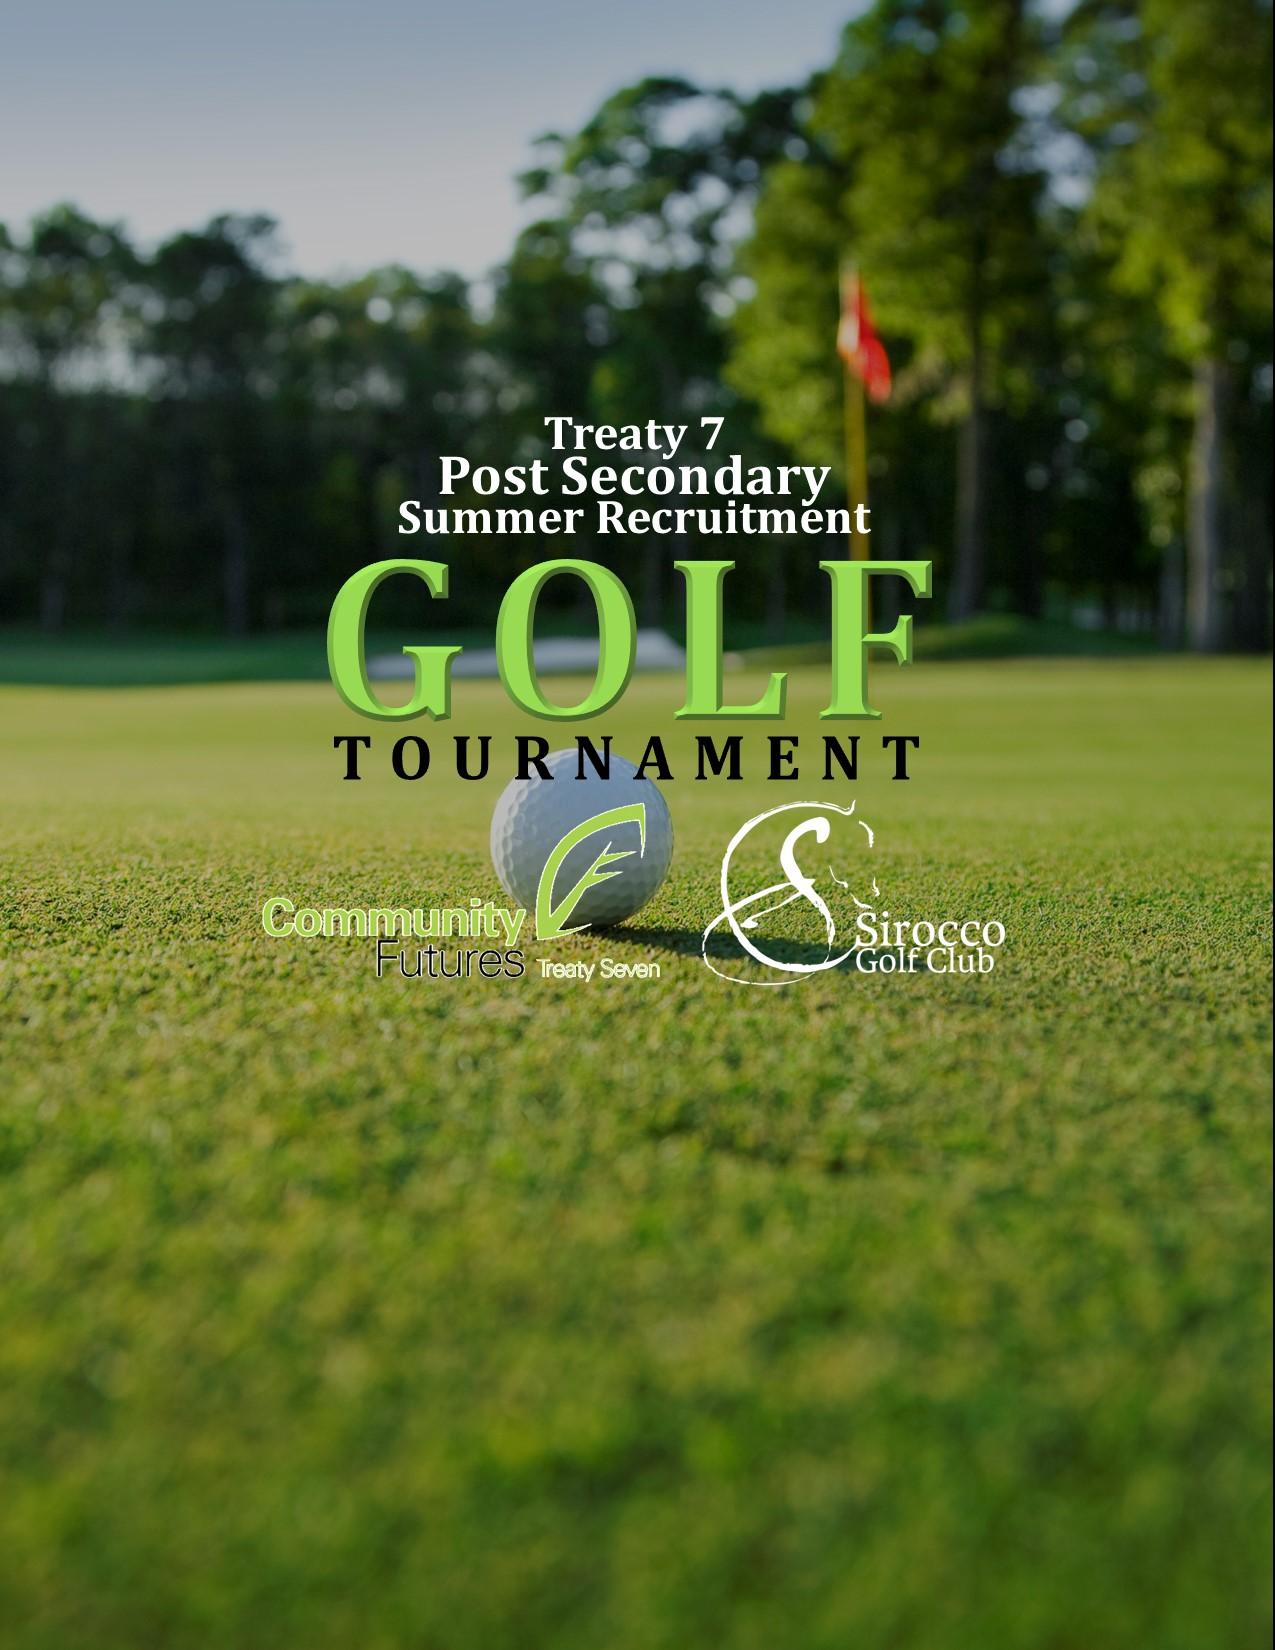 Treaty 7 Post Secondary Summer Recruitment Golf Tournament